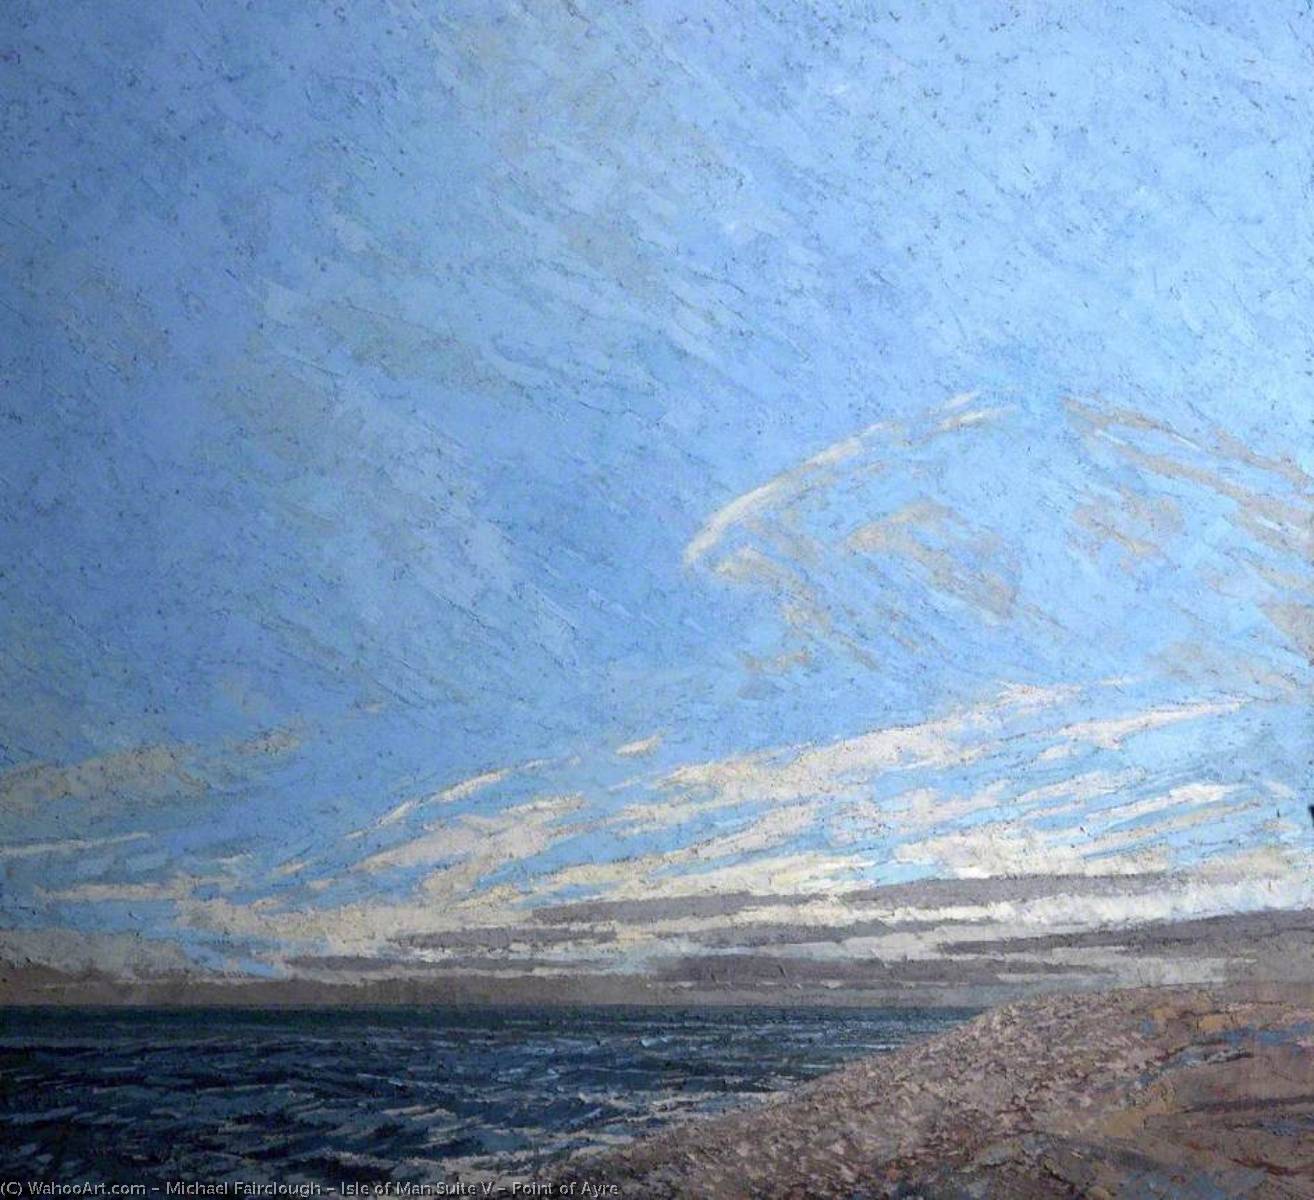 WikiOO.org - Encyclopedia of Fine Arts - Lukisan, Artwork Michael Fairclough - Isle of Man Suite V – Point of Ayre